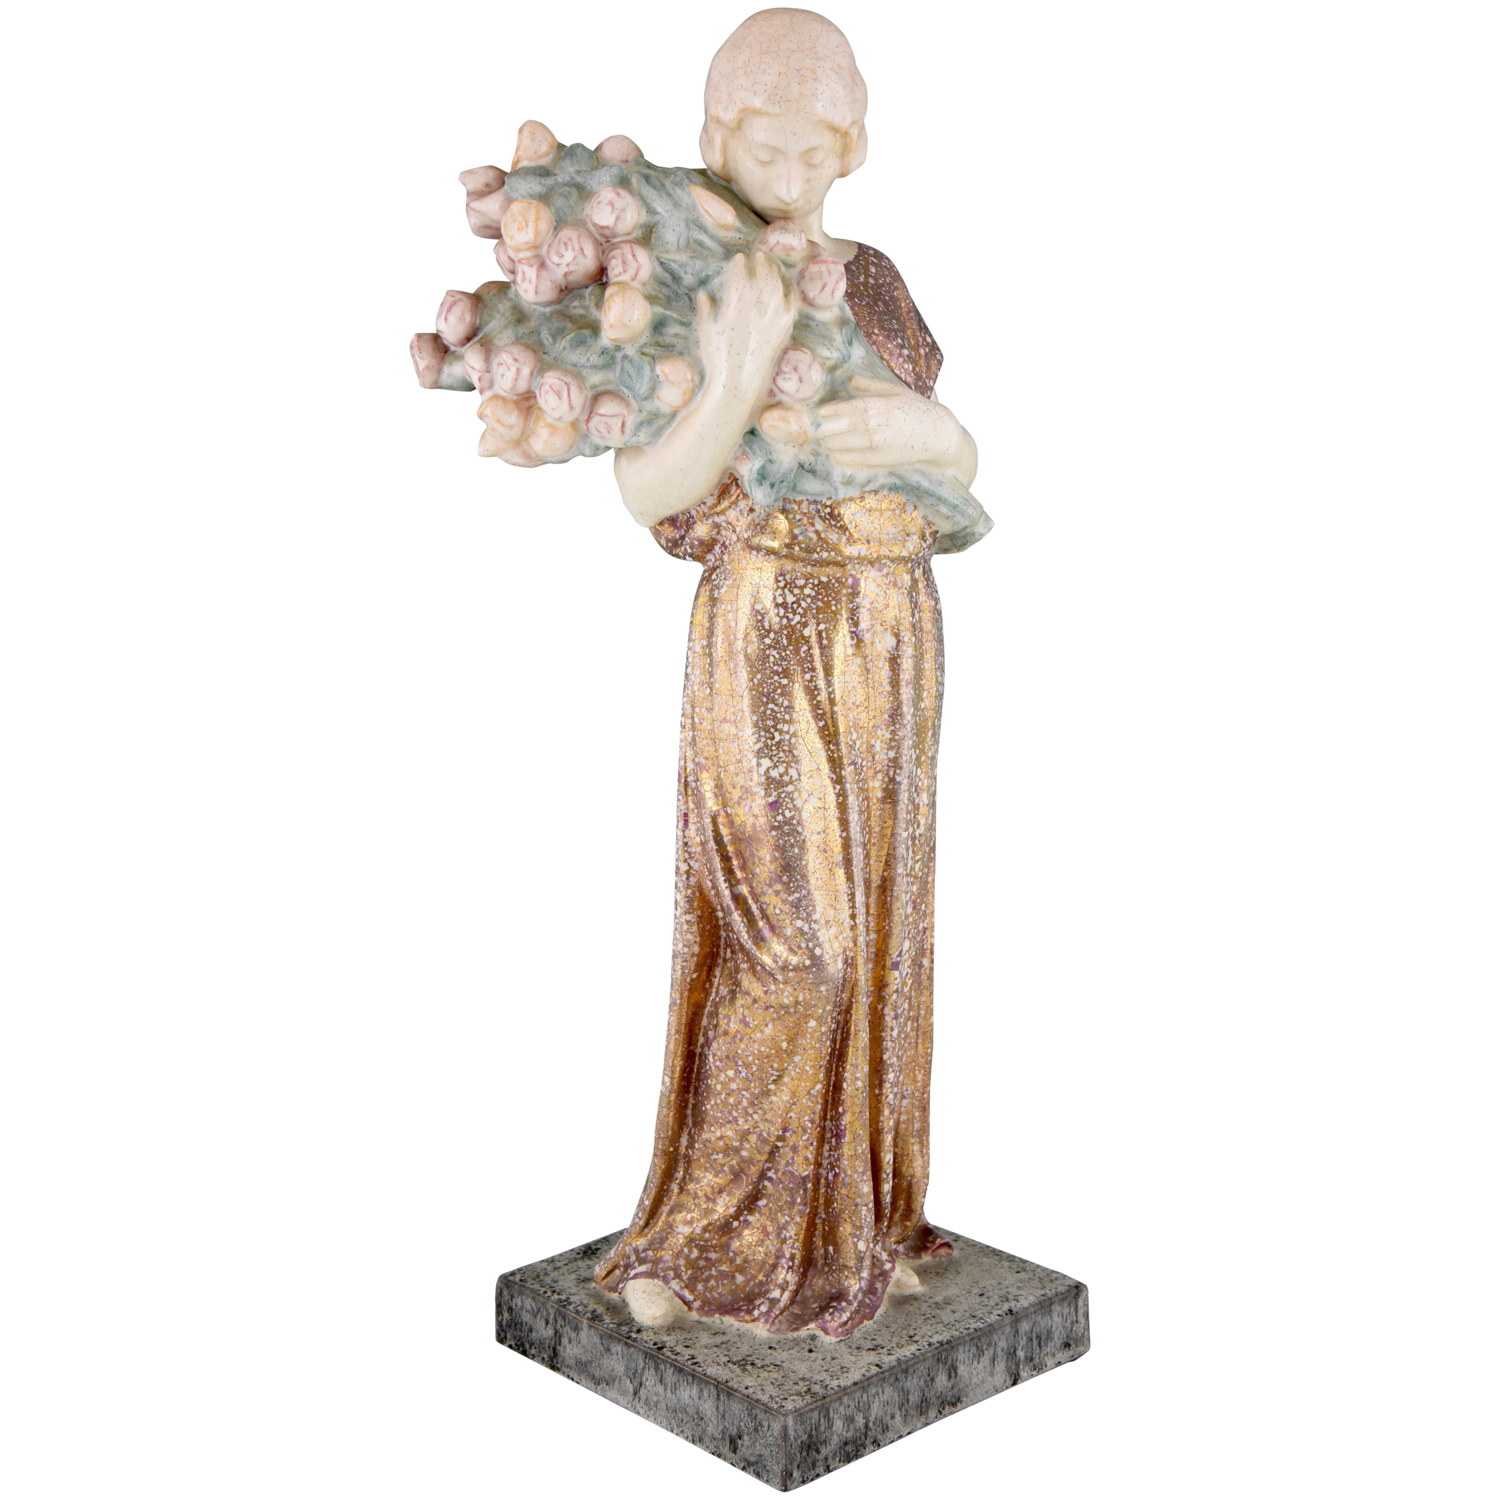 Art Deco ceramic sculpture woman with flowers.